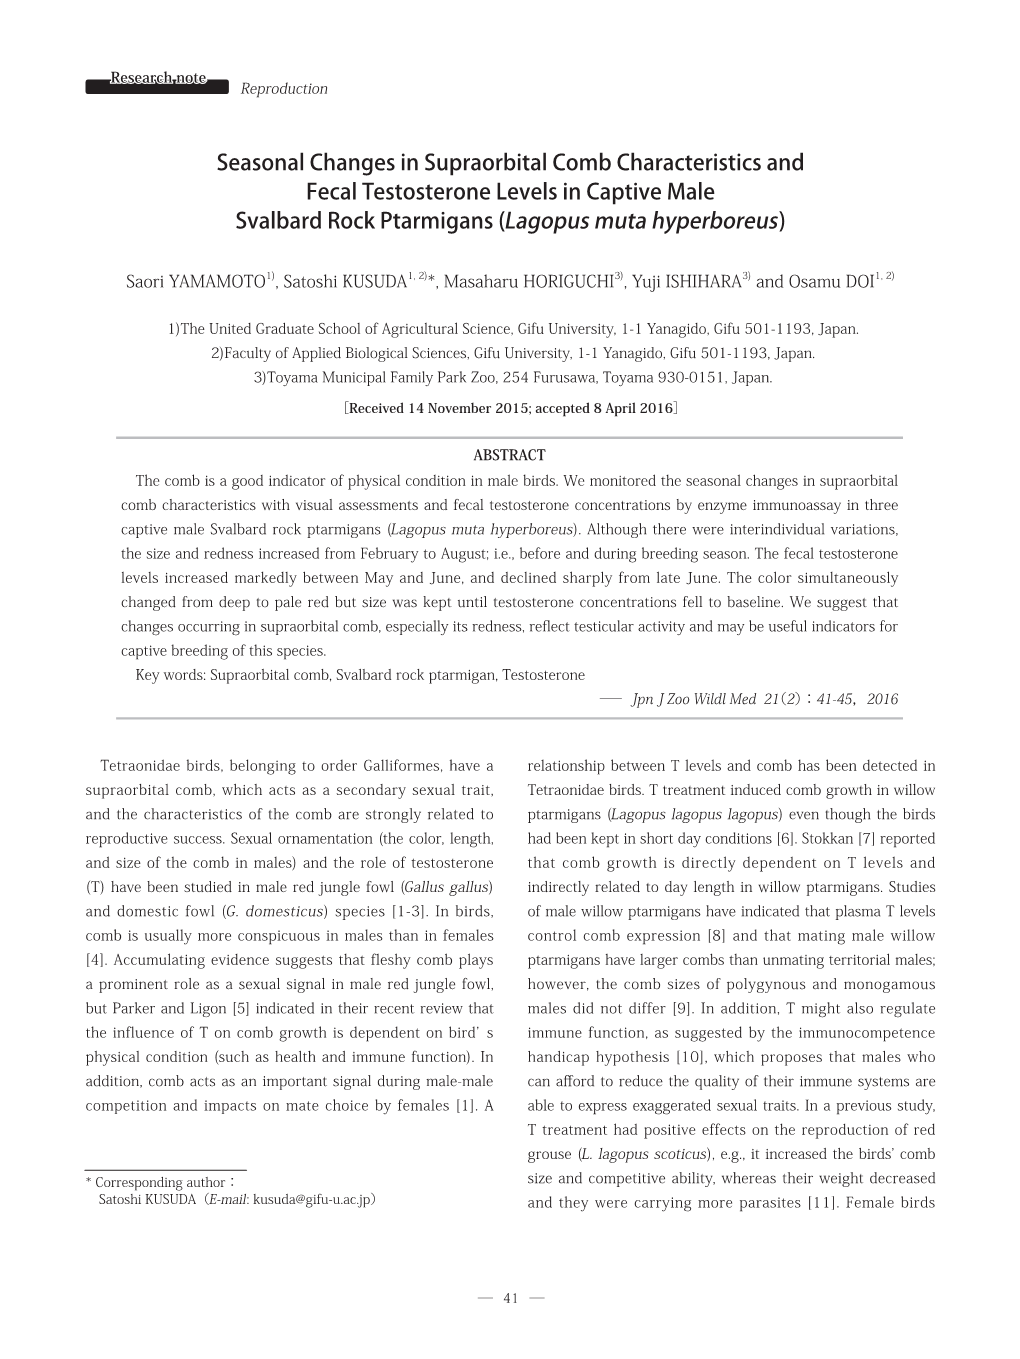 Seasonal Changes in Supraorbital Comb Characteristics and Fecal Testosterone Levels in Captive Male Svalbard Rock Ptarmigans (Lagopus Muta Hyperboreus)